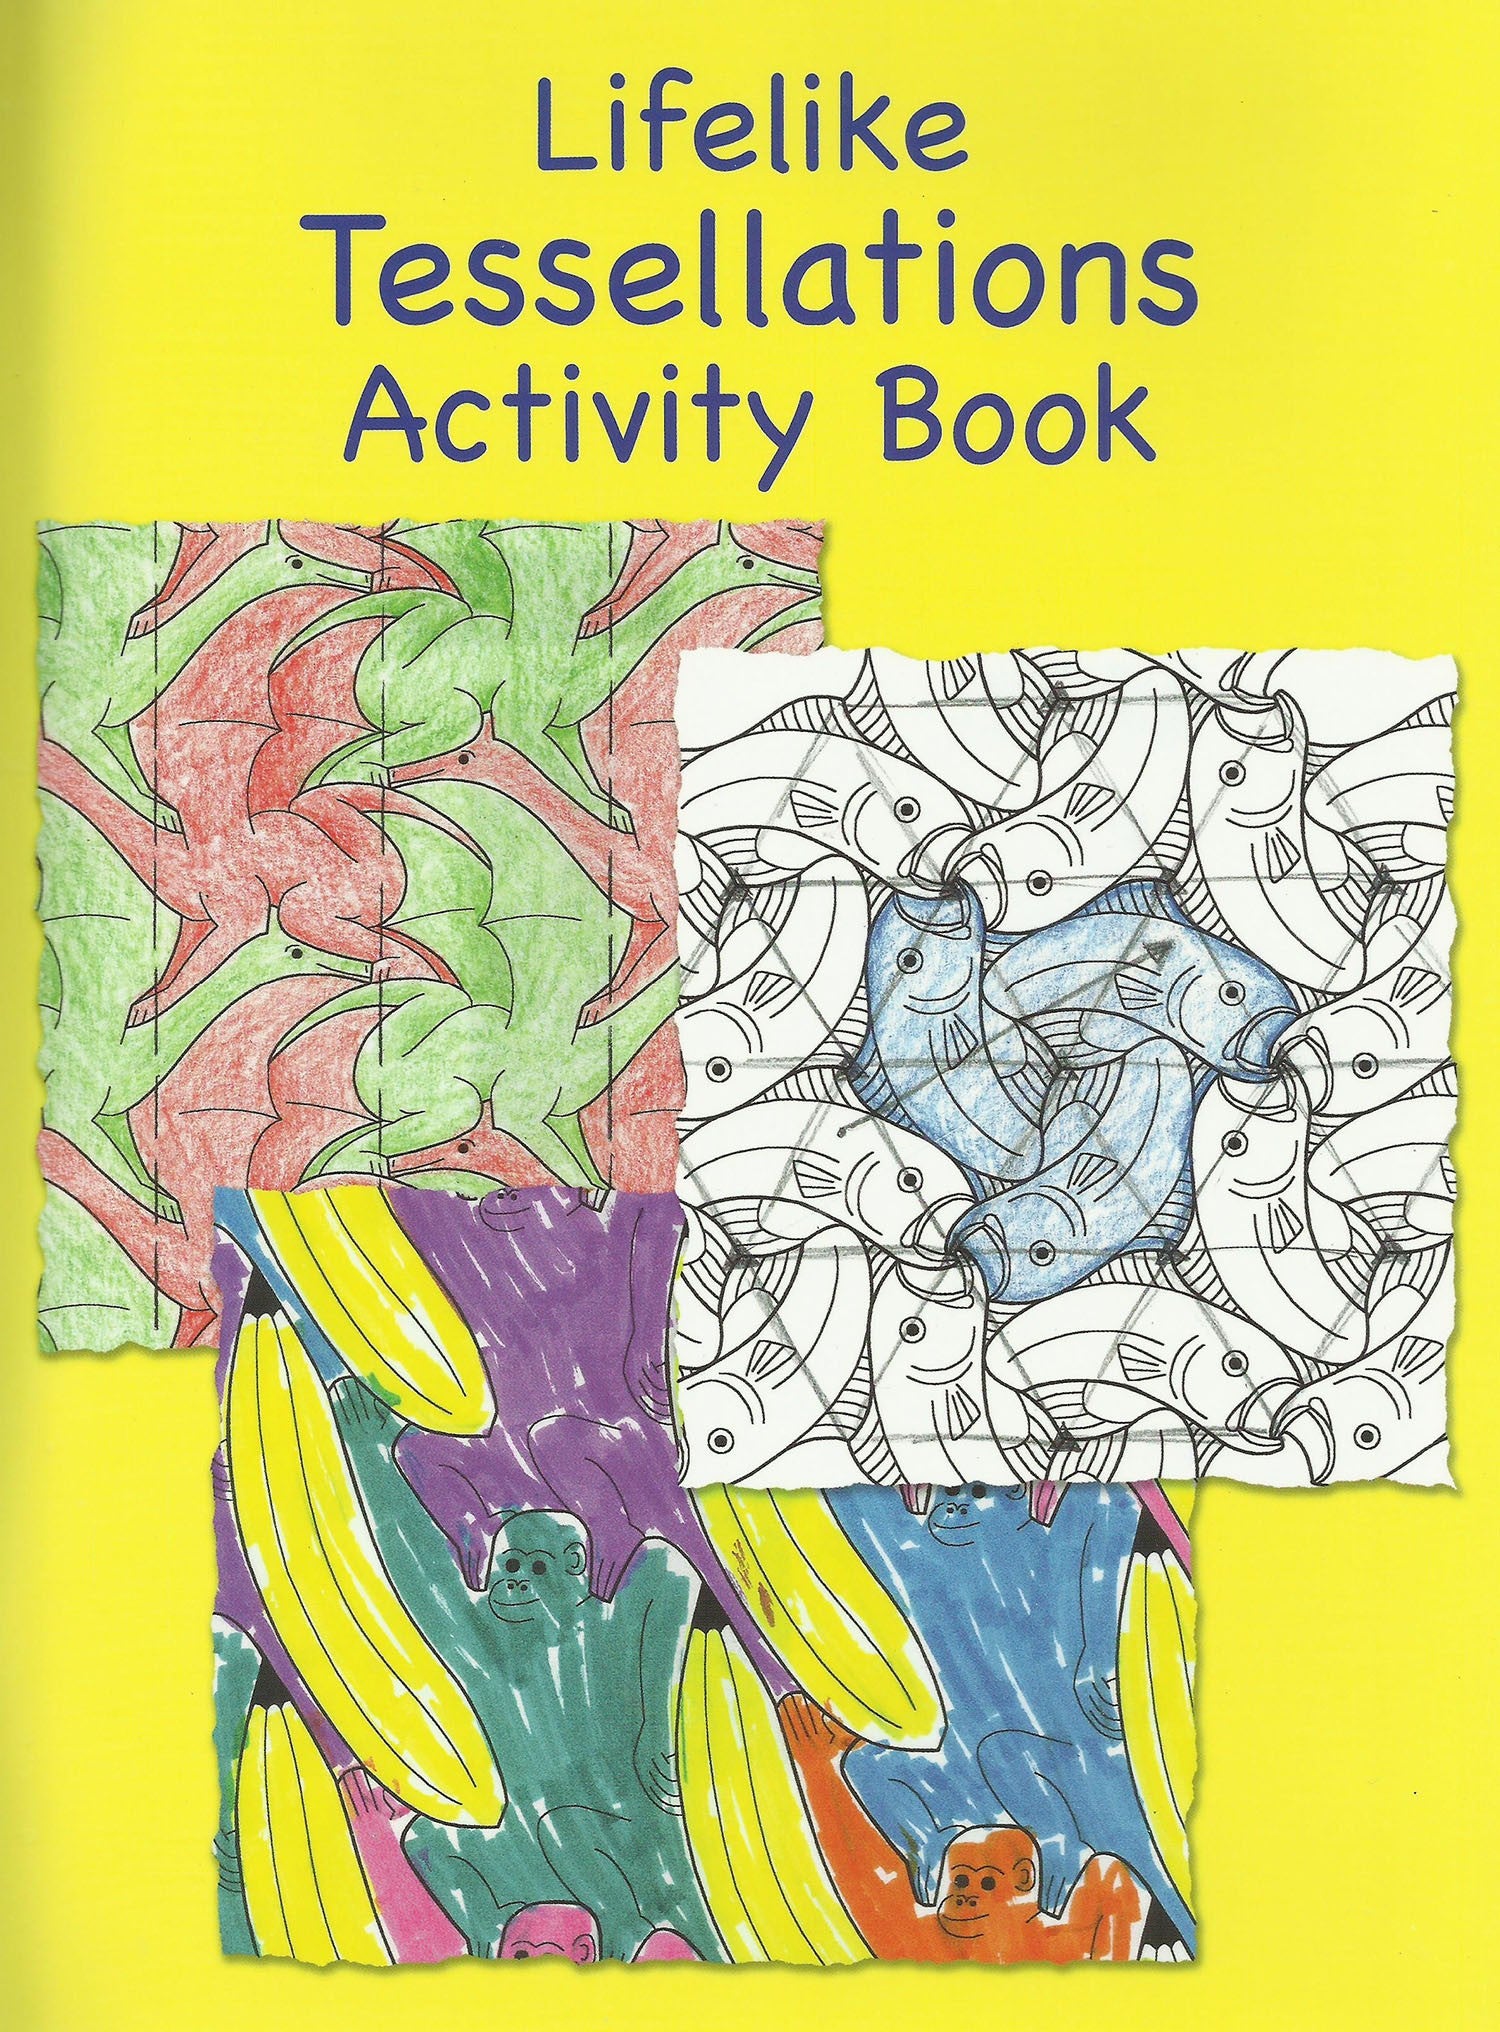 Lifelike Tessellations Activity Book